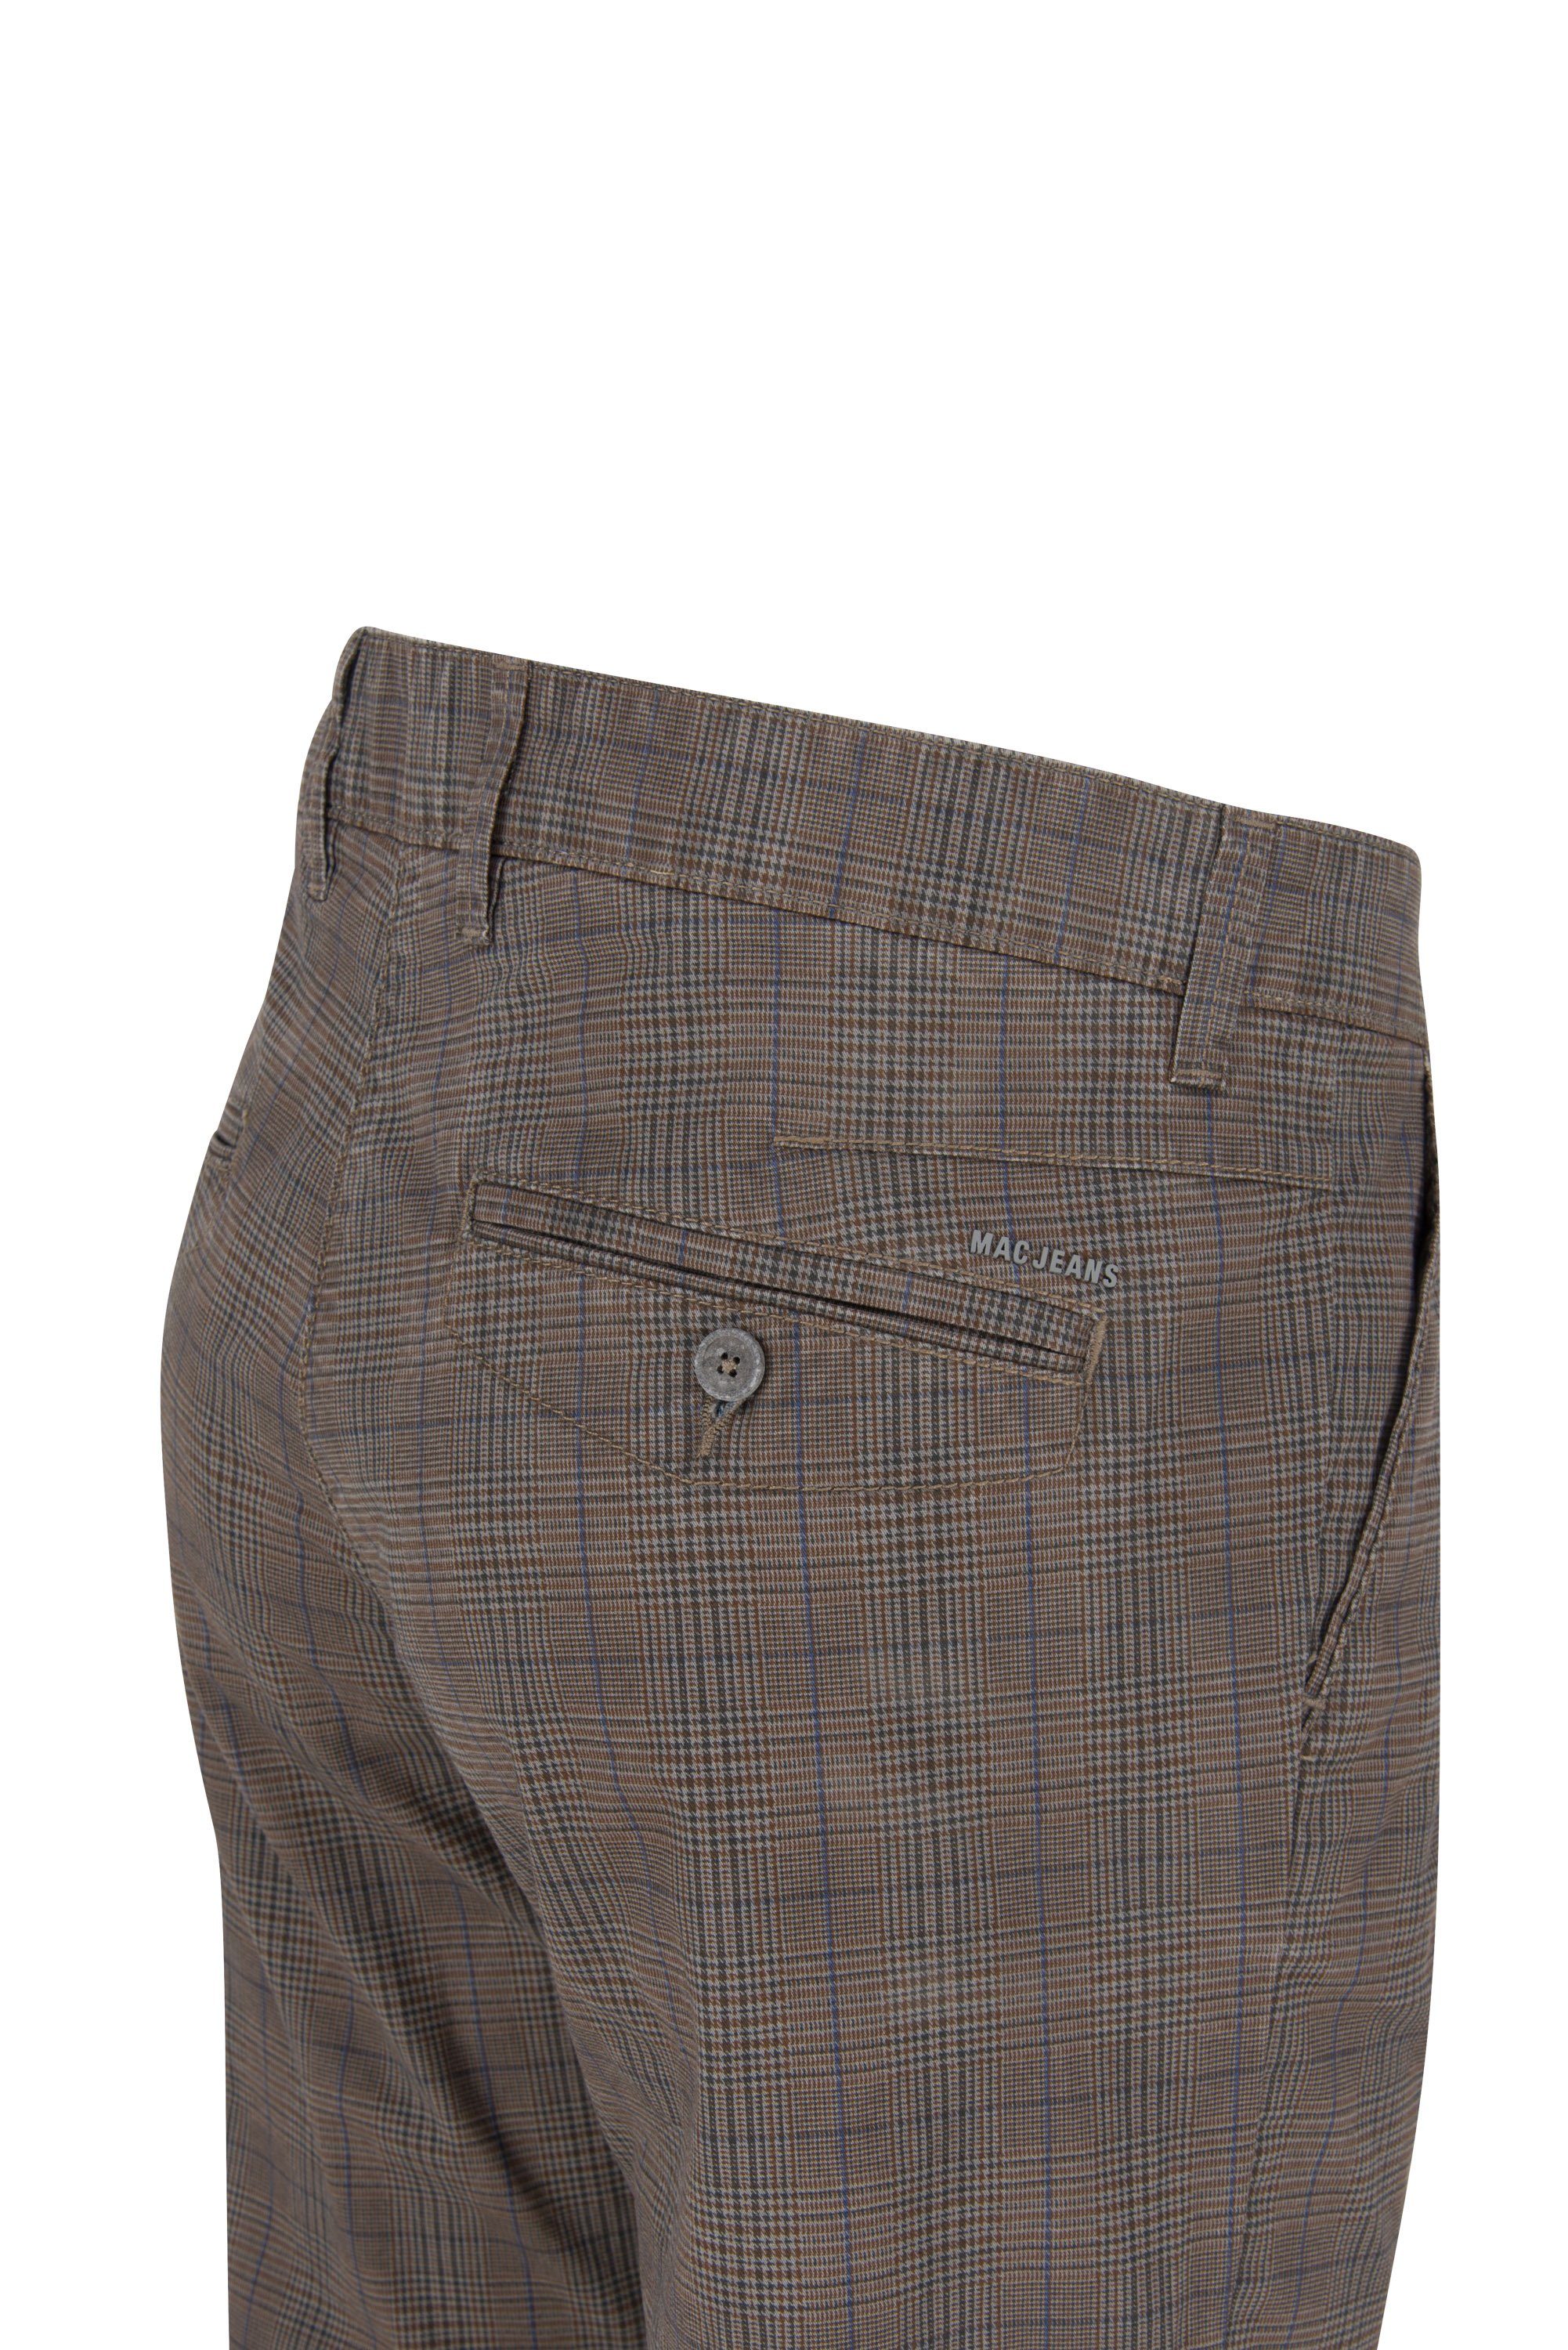 check 6365-00-0670L MAC MAC 5-Pocket-Jeans PRINTED LENNOX fawn brown GABARDINE 278K